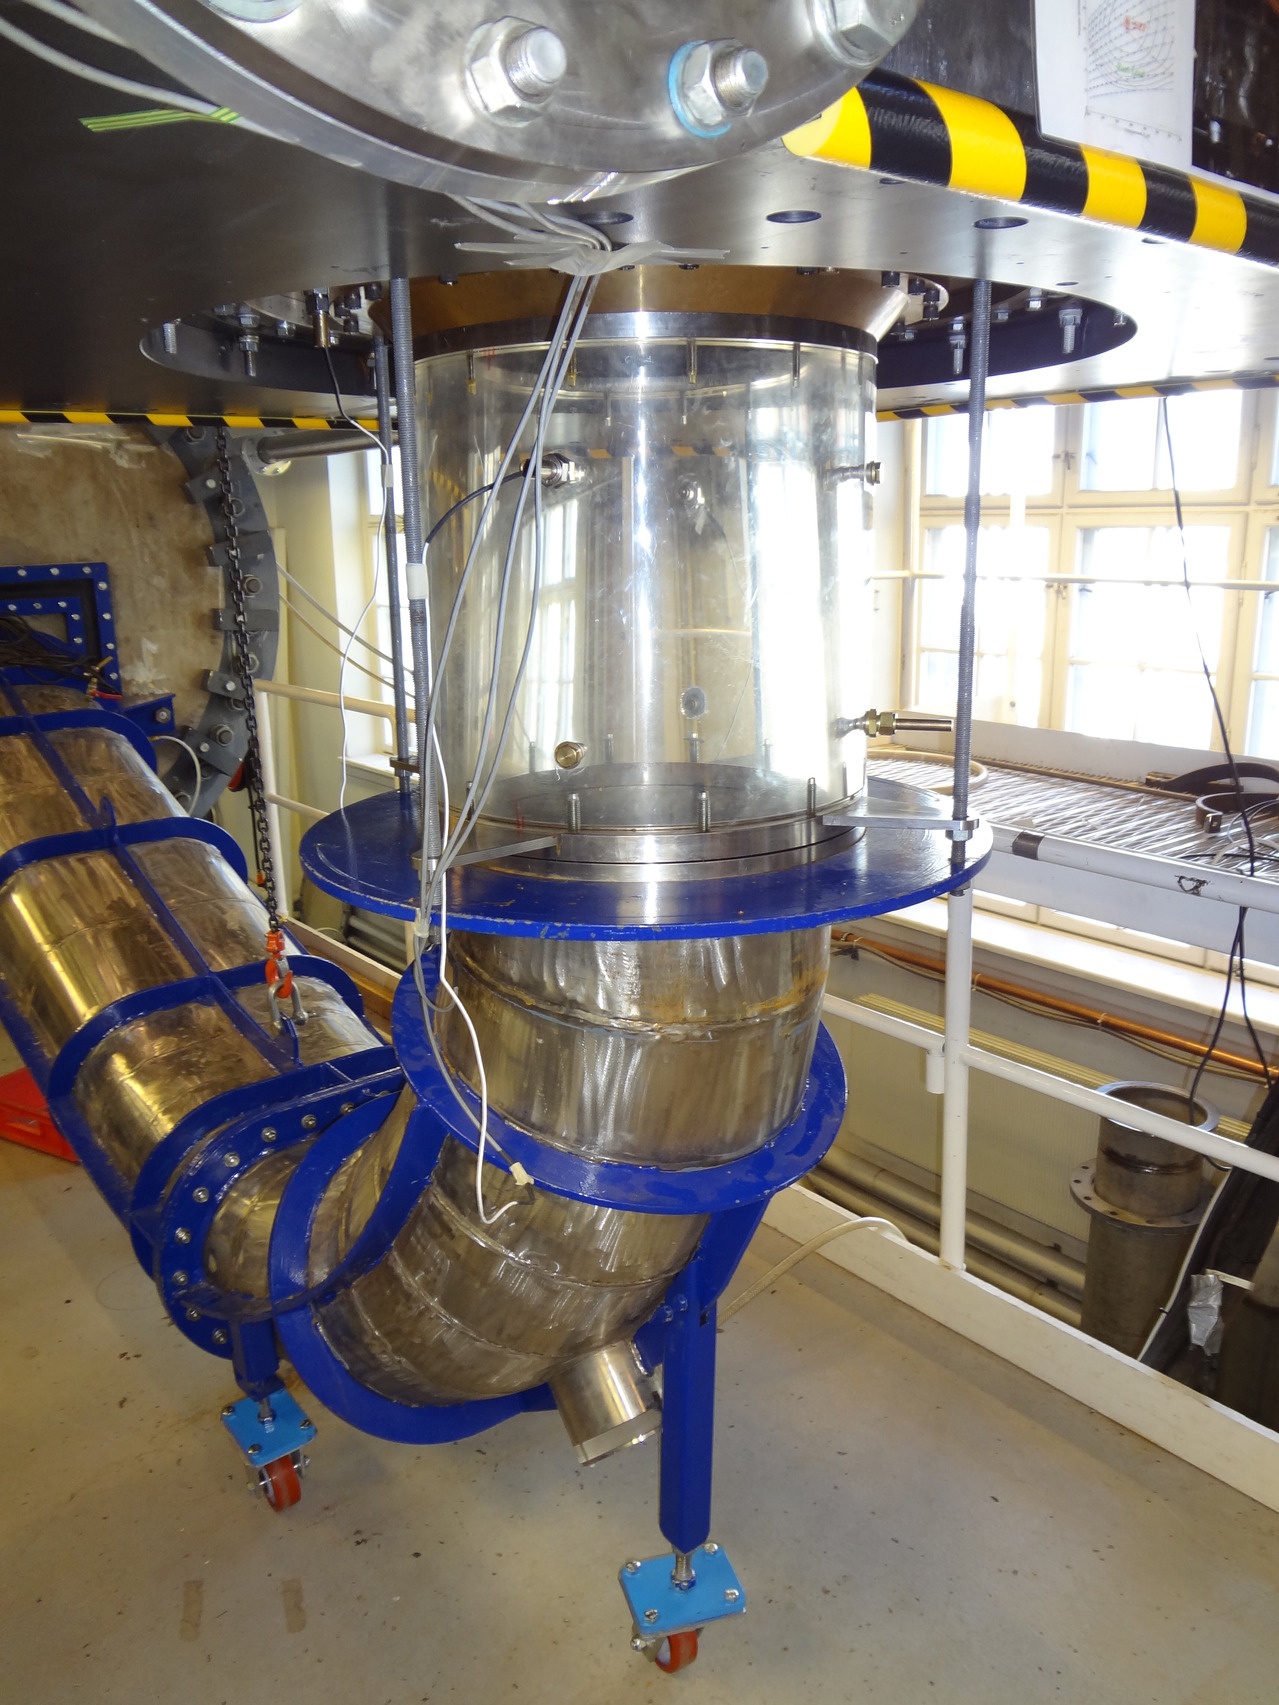 Francis Turbine test rig and draft tube